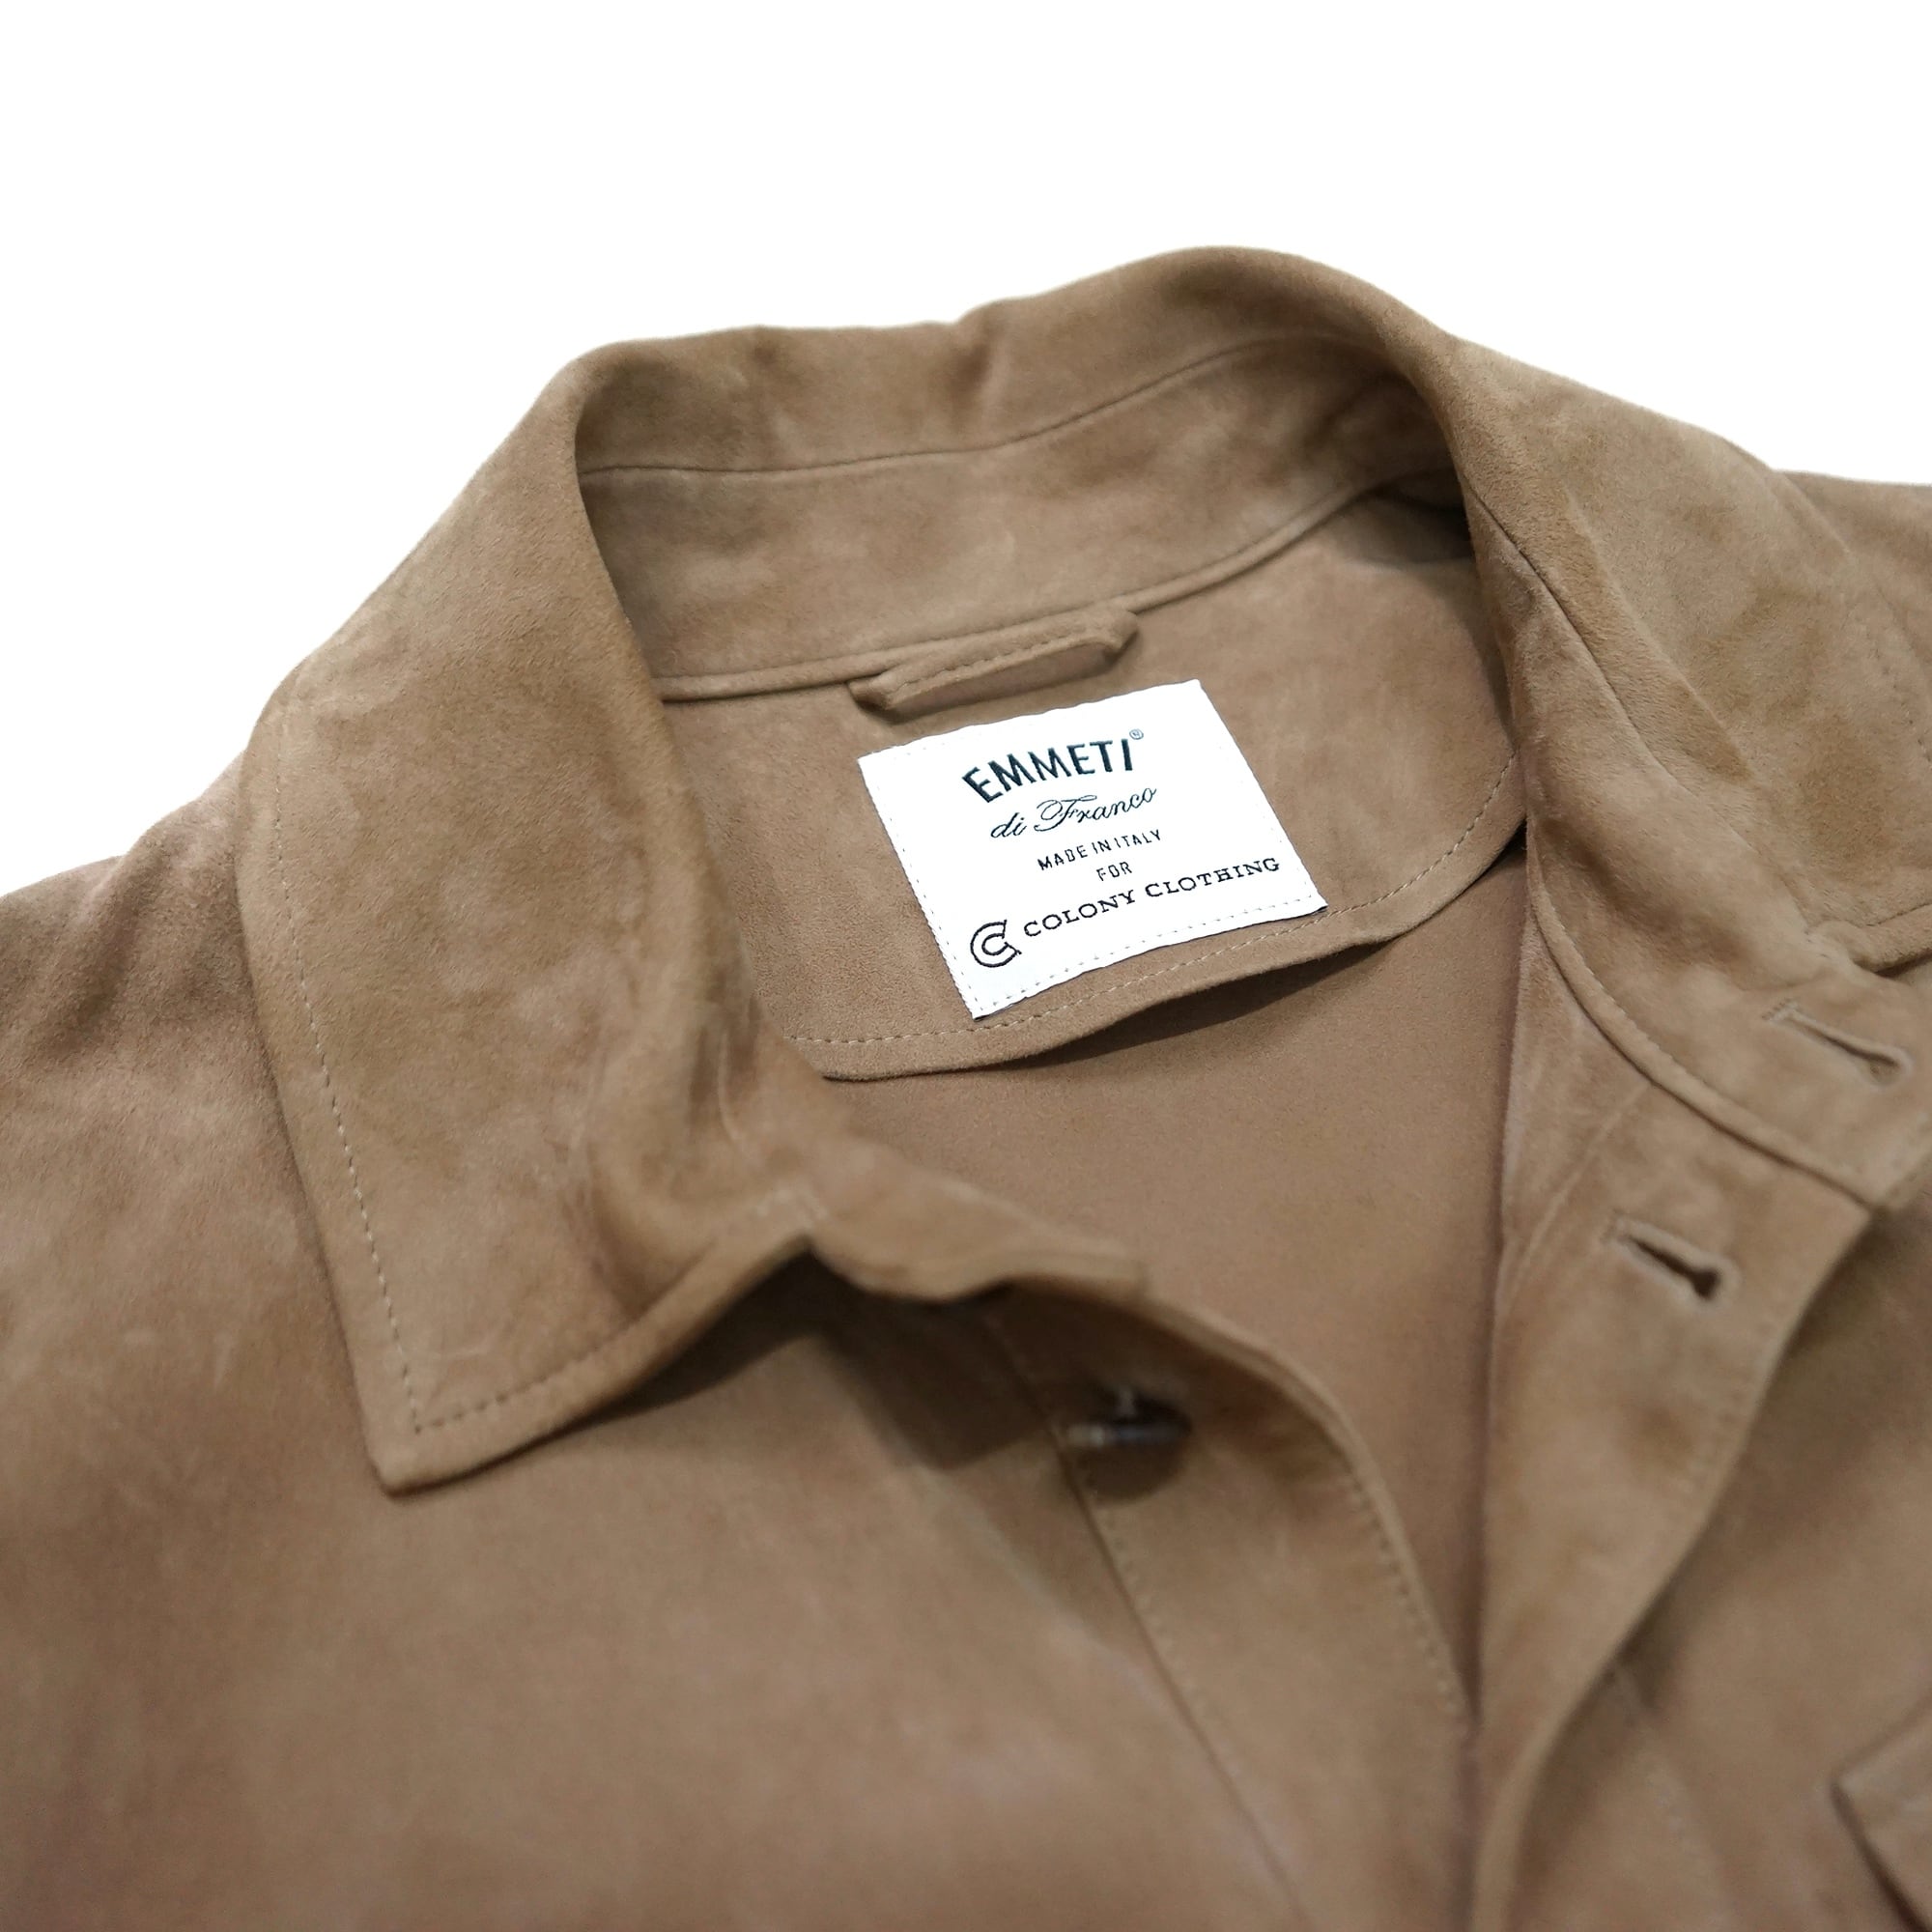 Emmeti for COLONY CLOTHING Travel leather jacket 